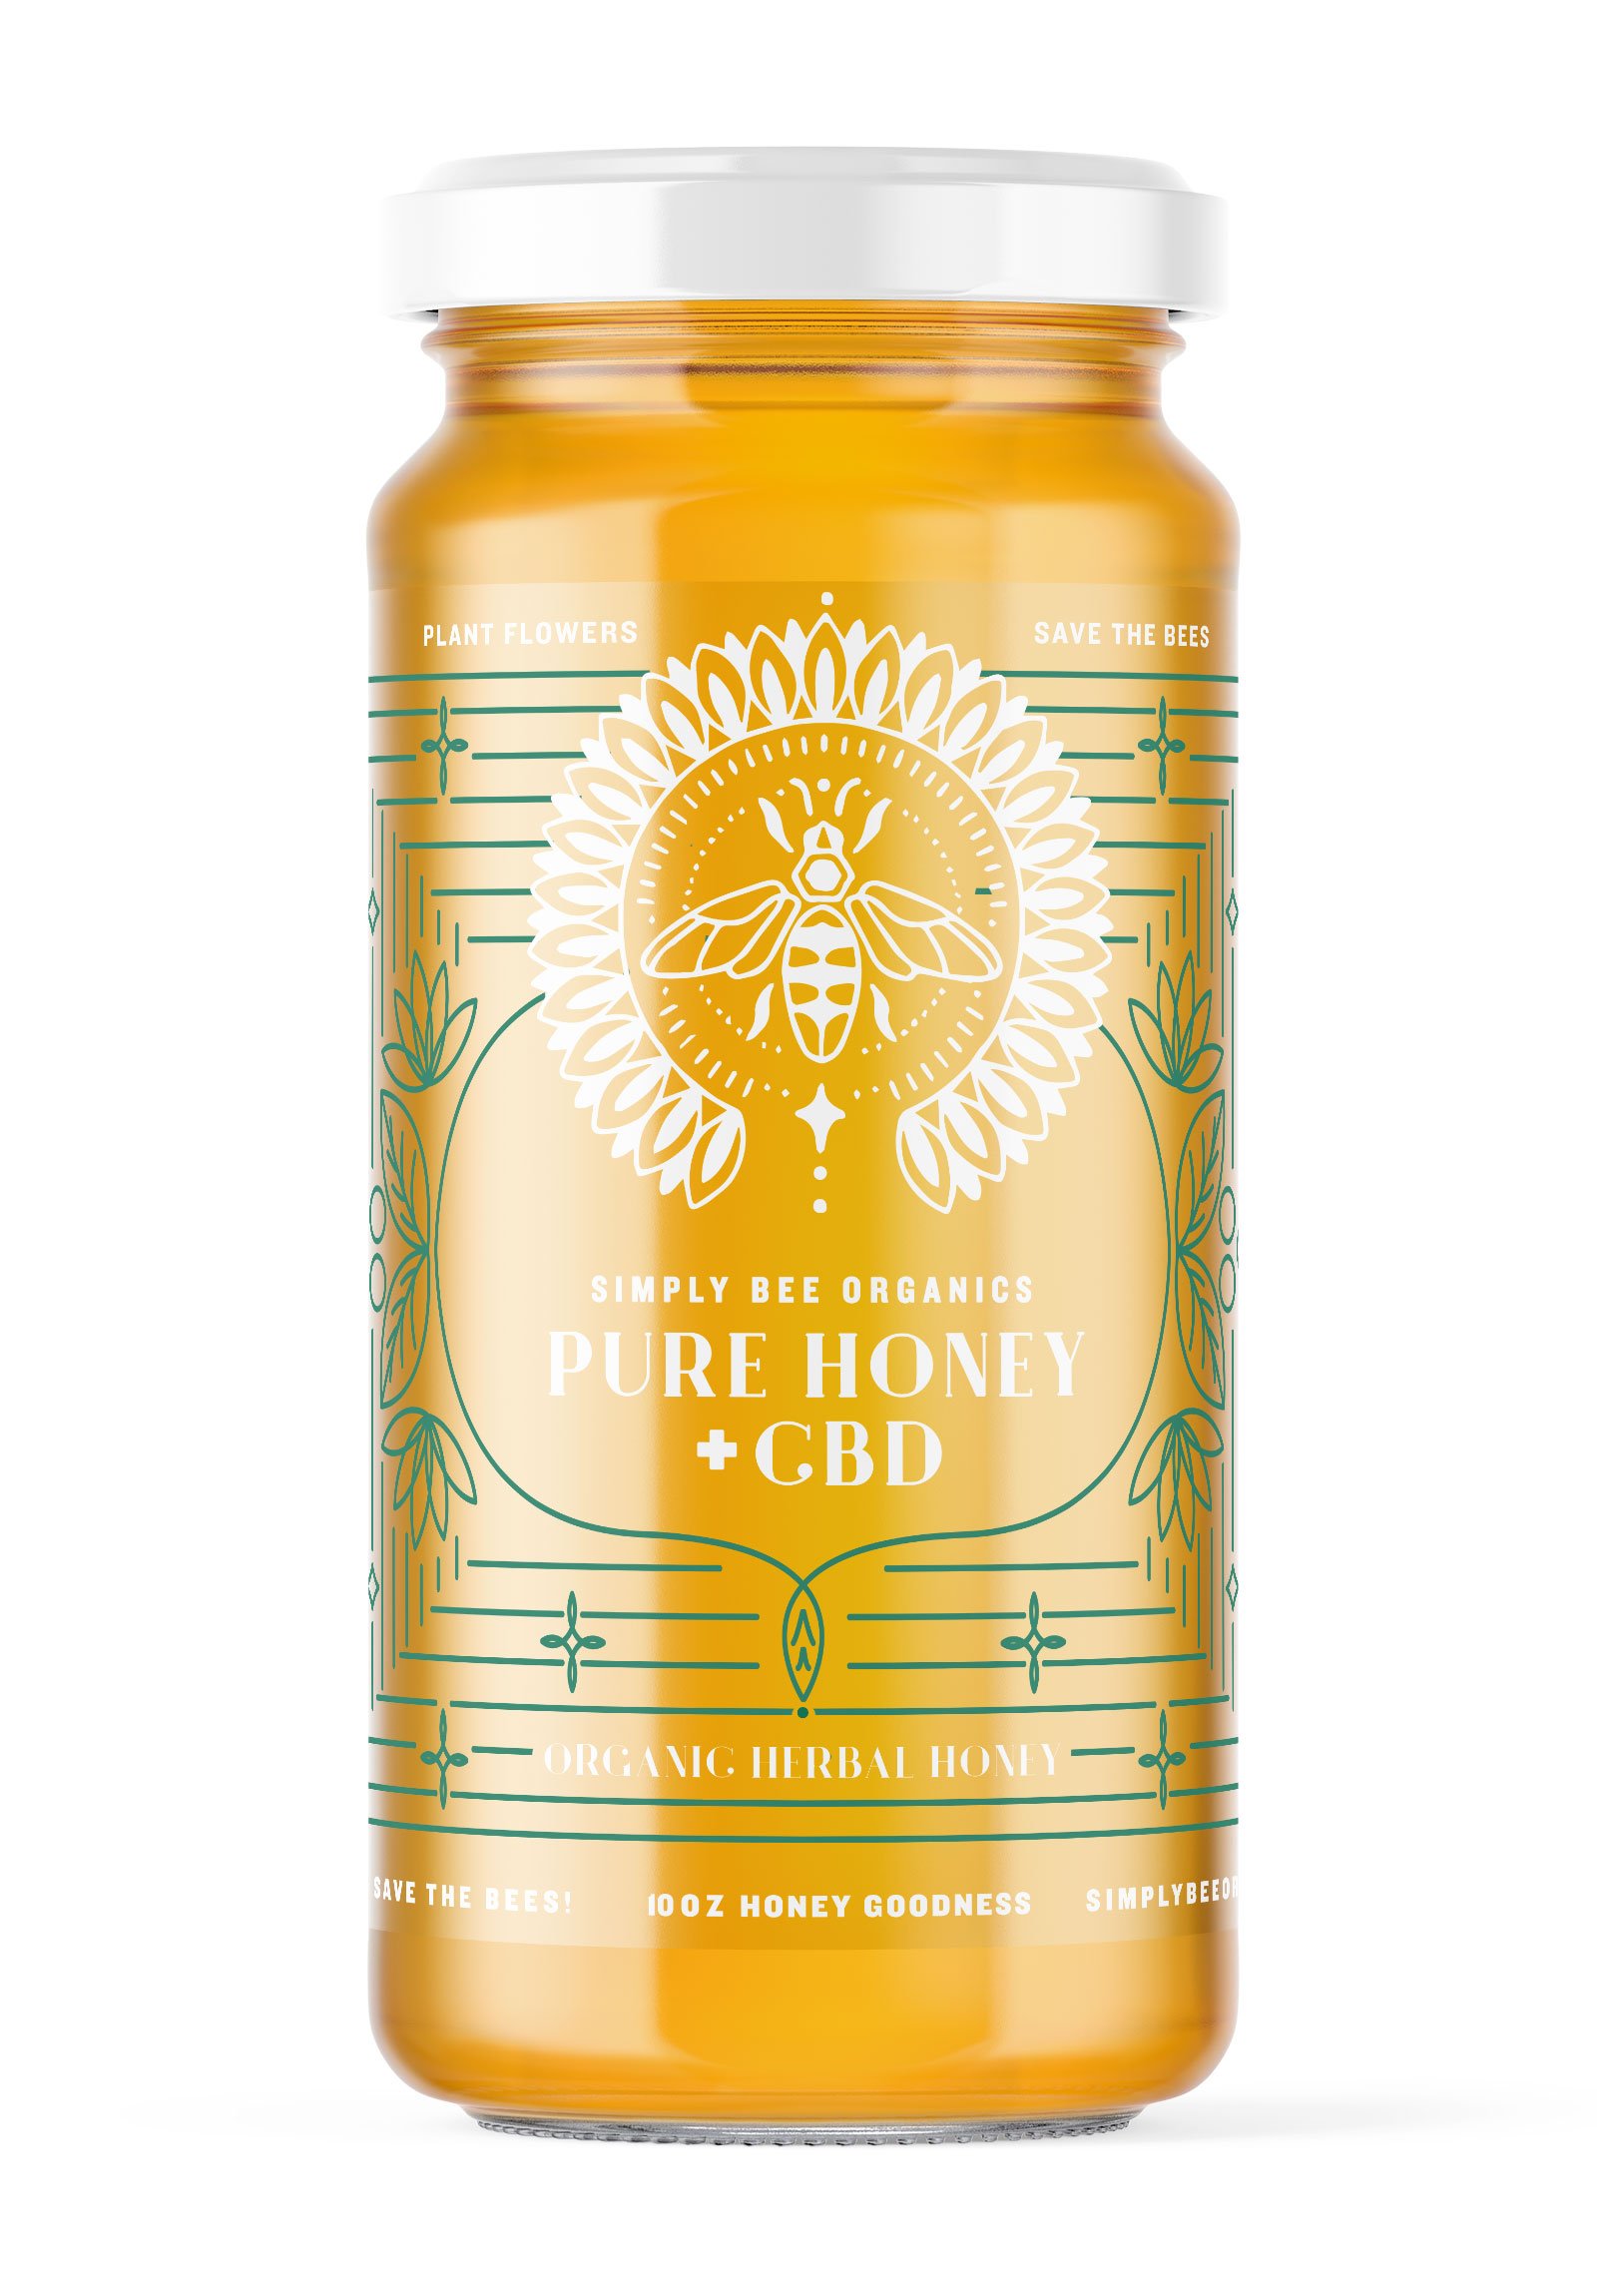 Simply-Bee-Organics-Honey-Label-Design-Concept-3.jpg